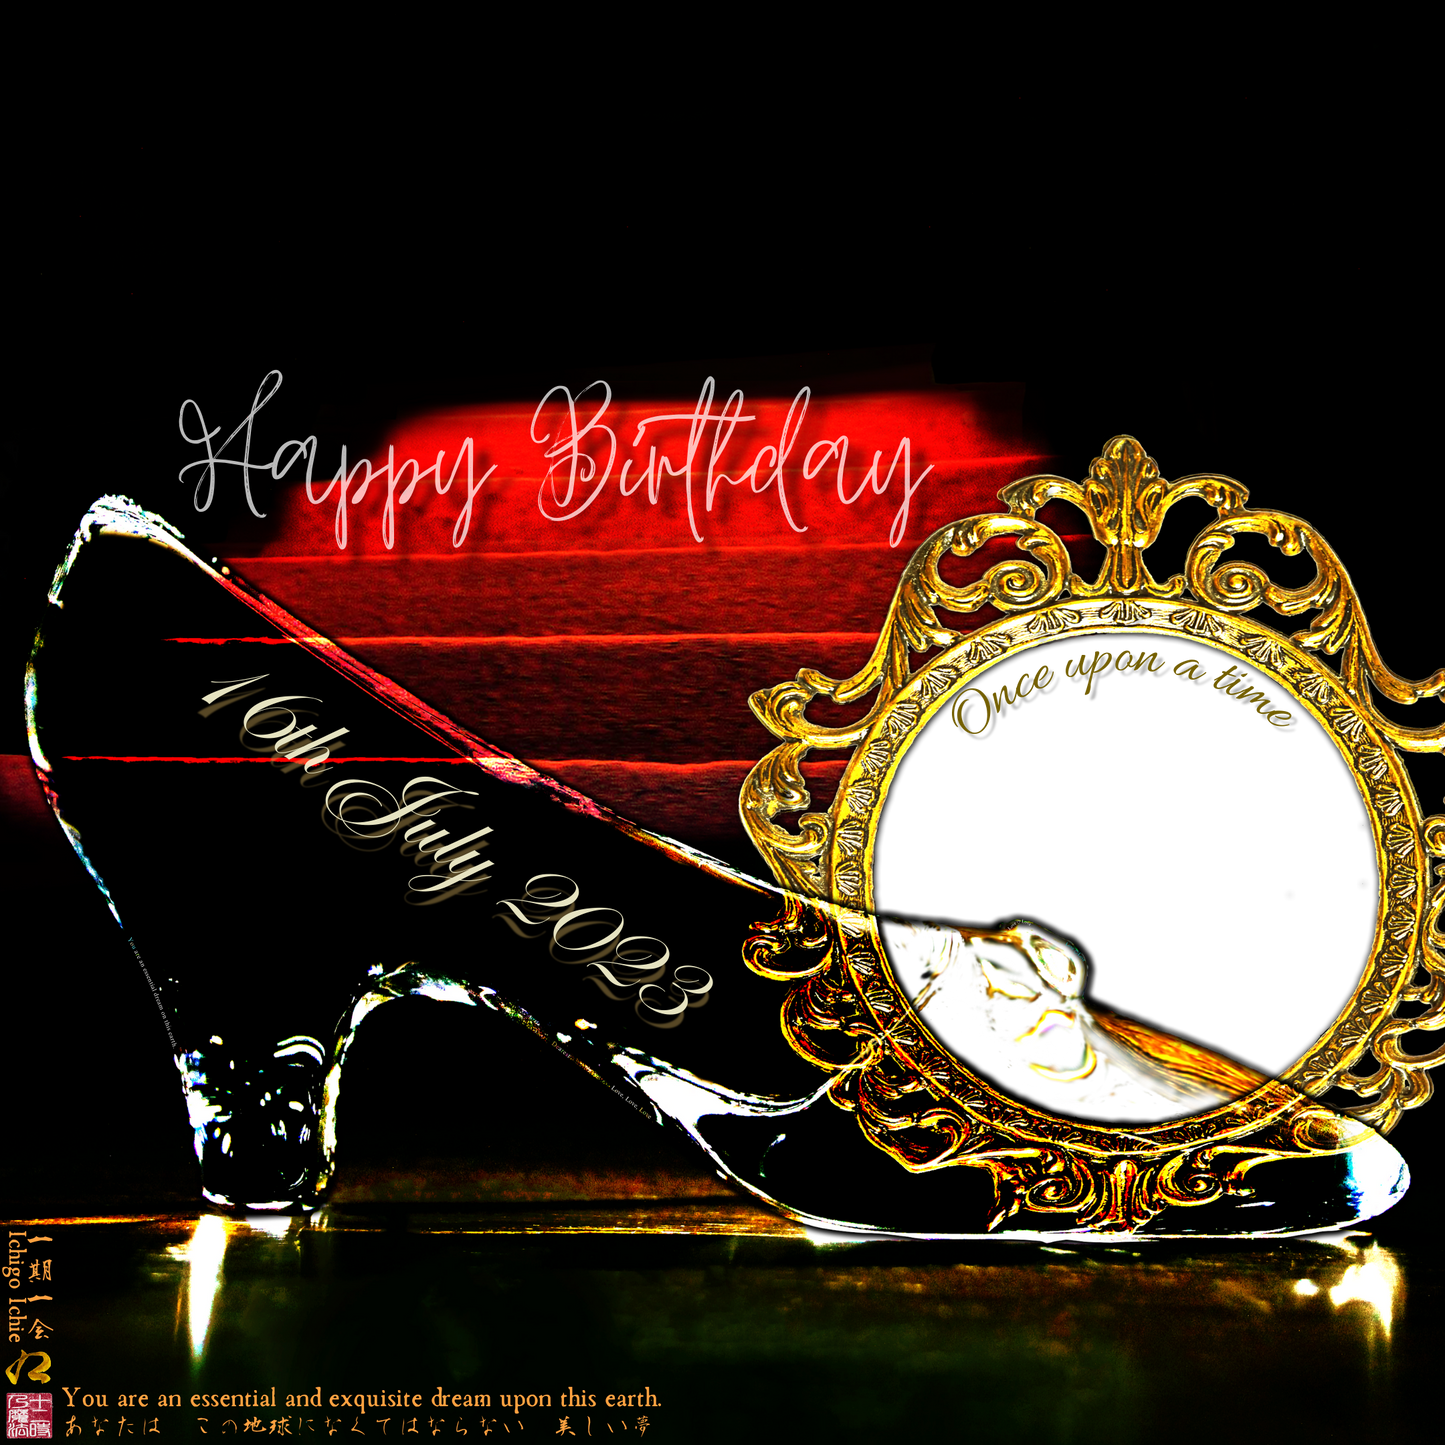 Happy Birthday Glass Slipper "Ichigo Ichie" 16th July 2023 the Right (1-of-1) NFT Art